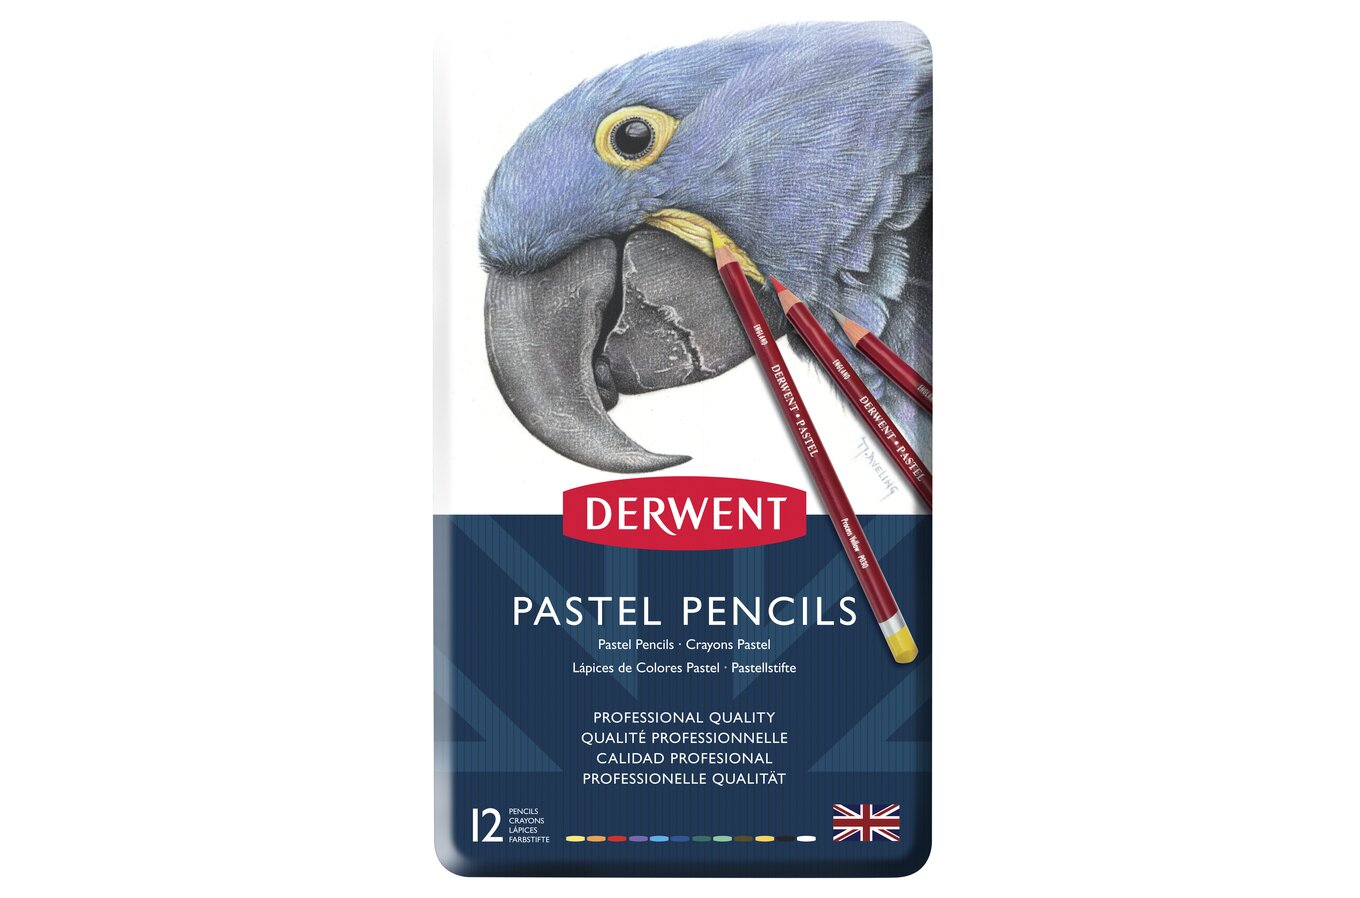 Derwent Art - Derwent Pastel Pencils have a unique fine